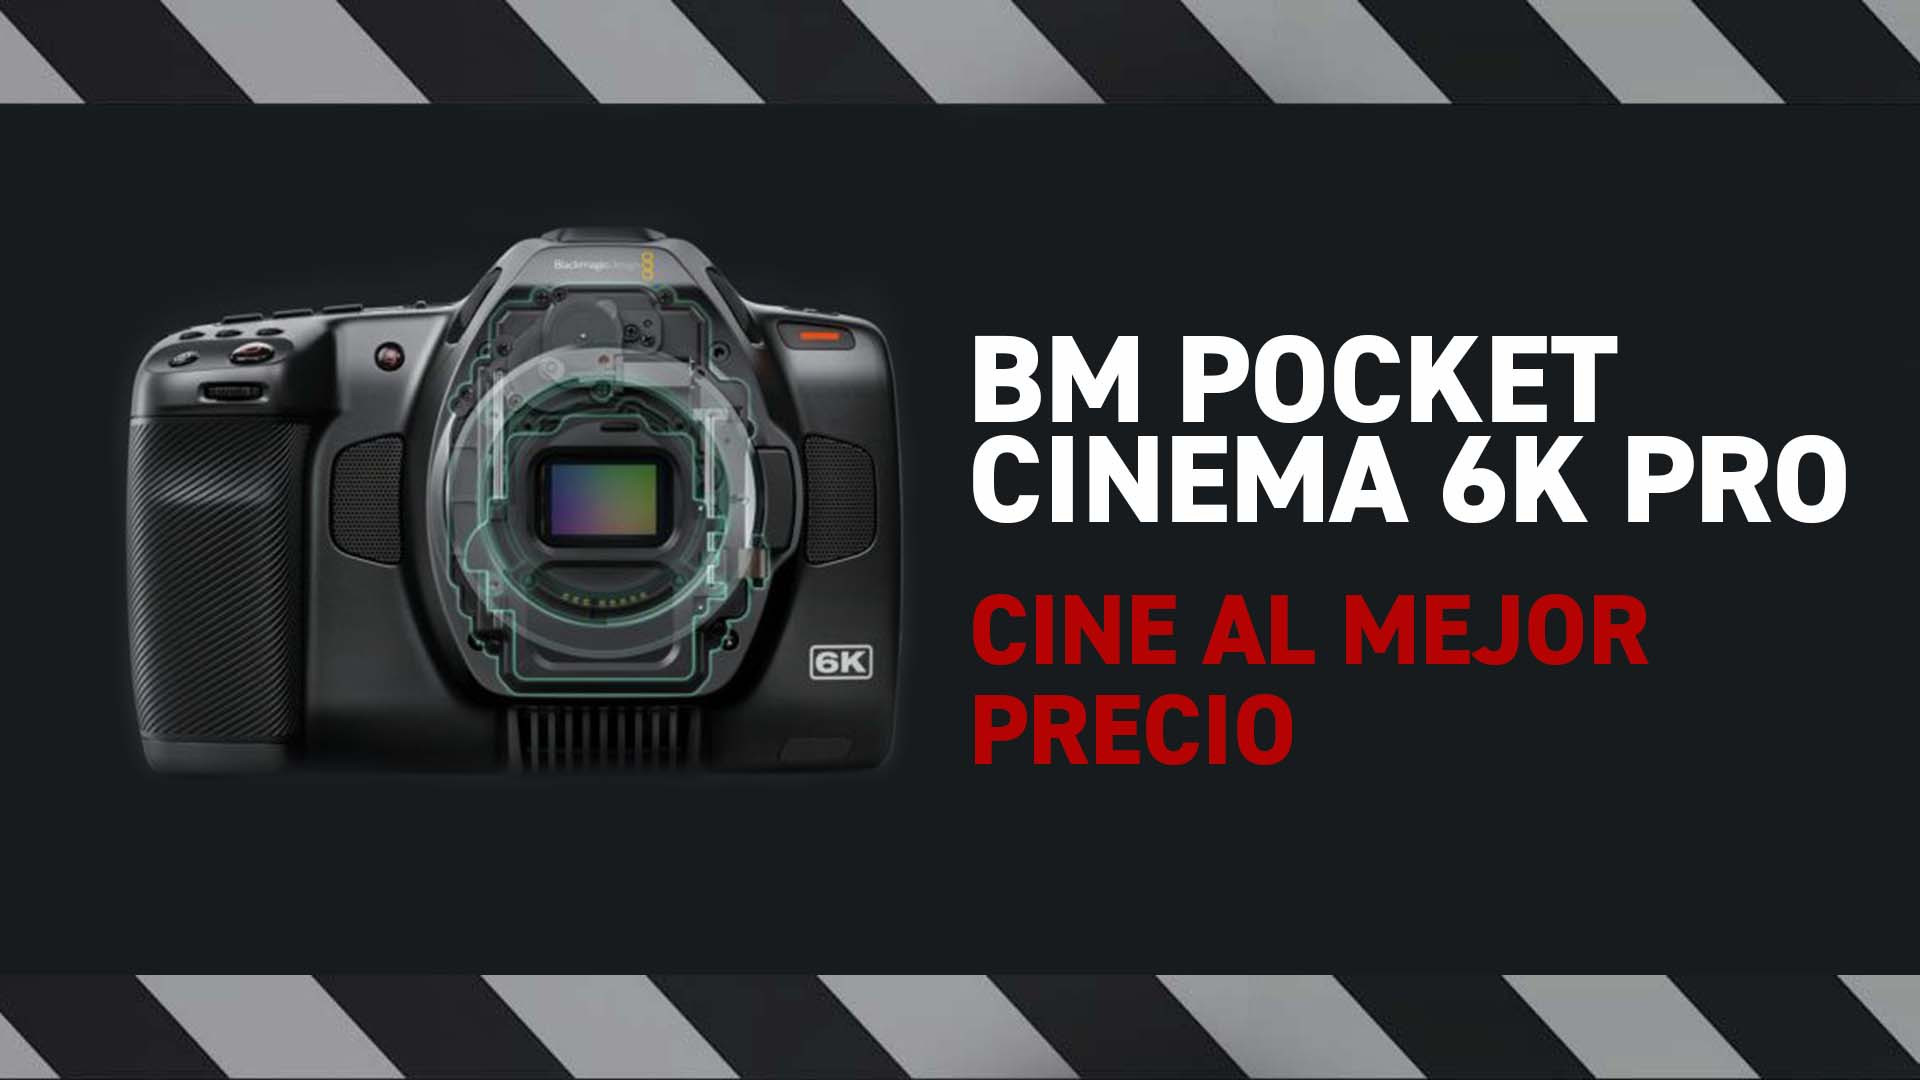 BlackMagic Pocket Cinema 6K Pro